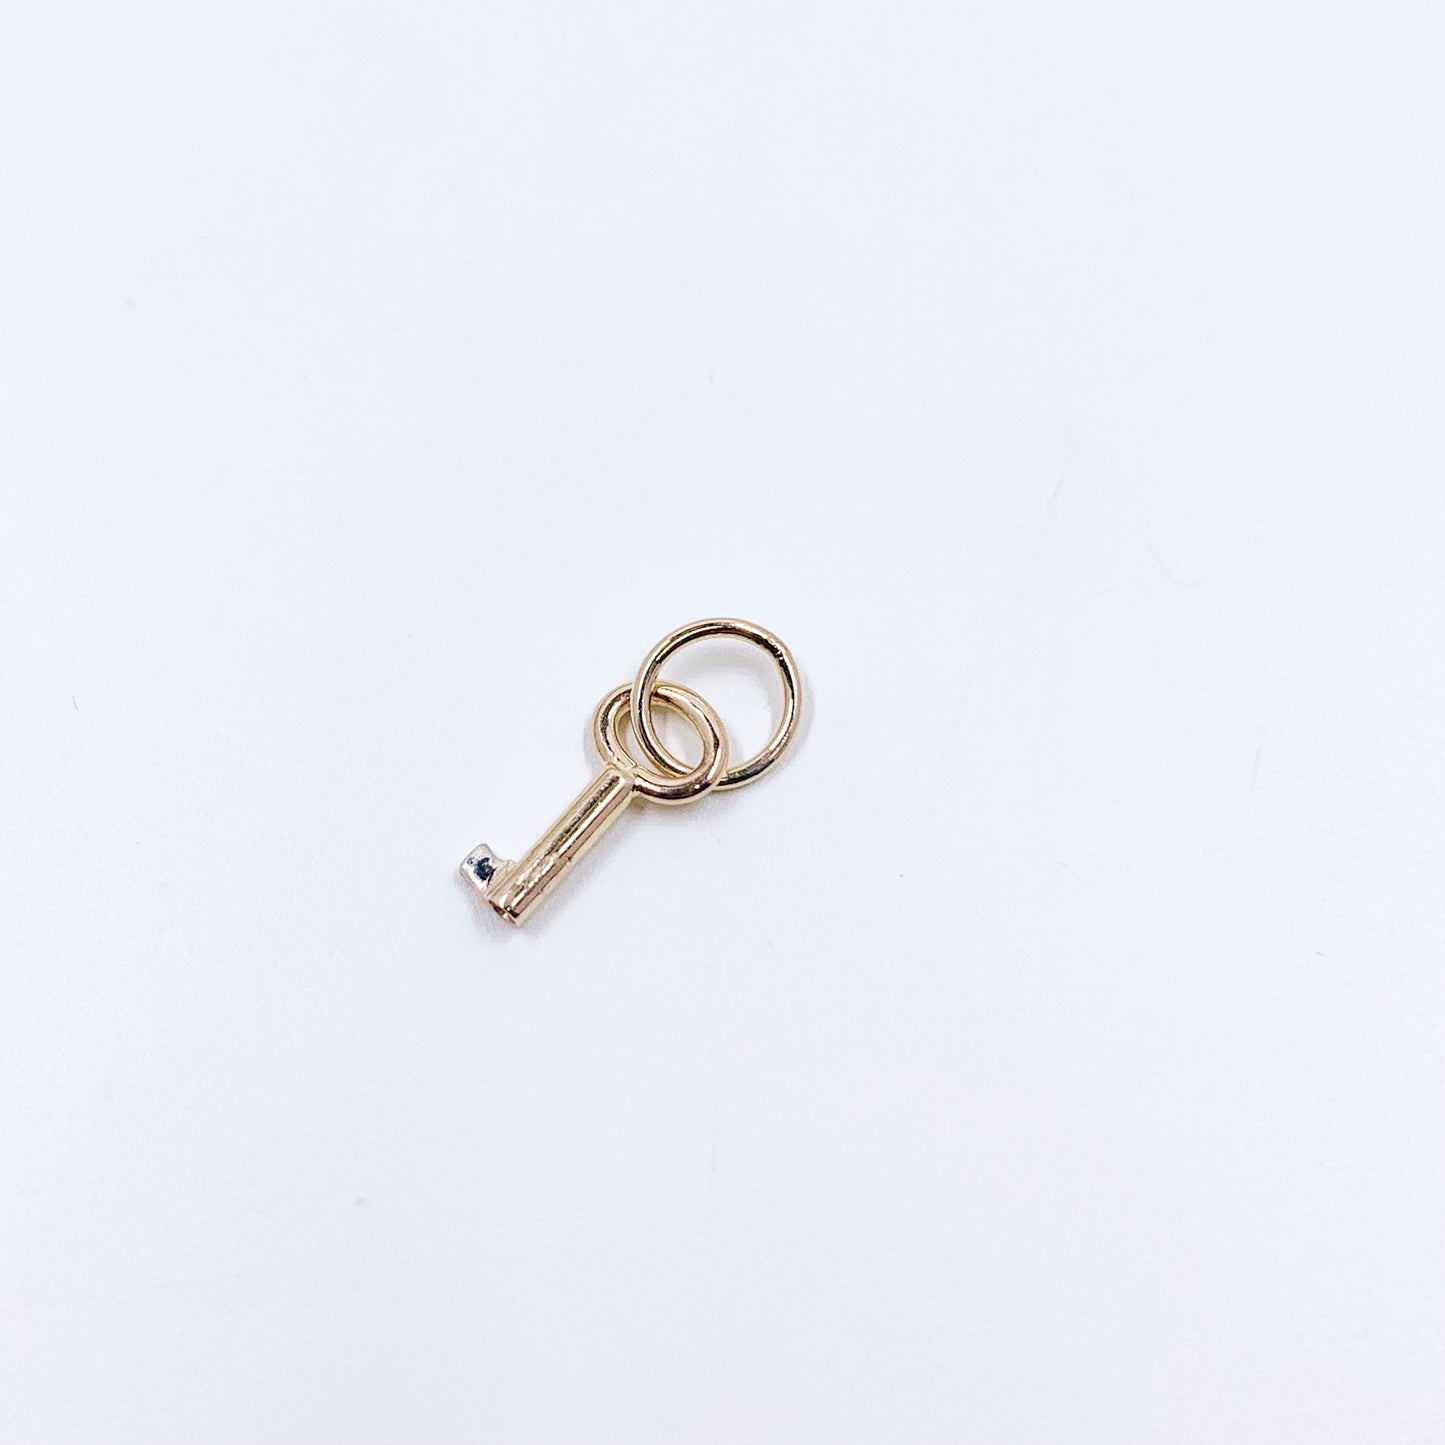 Vintage Tiny 14k Gold Key Charm | Skeleton Door Key Charm | Small Gold Key Pendant